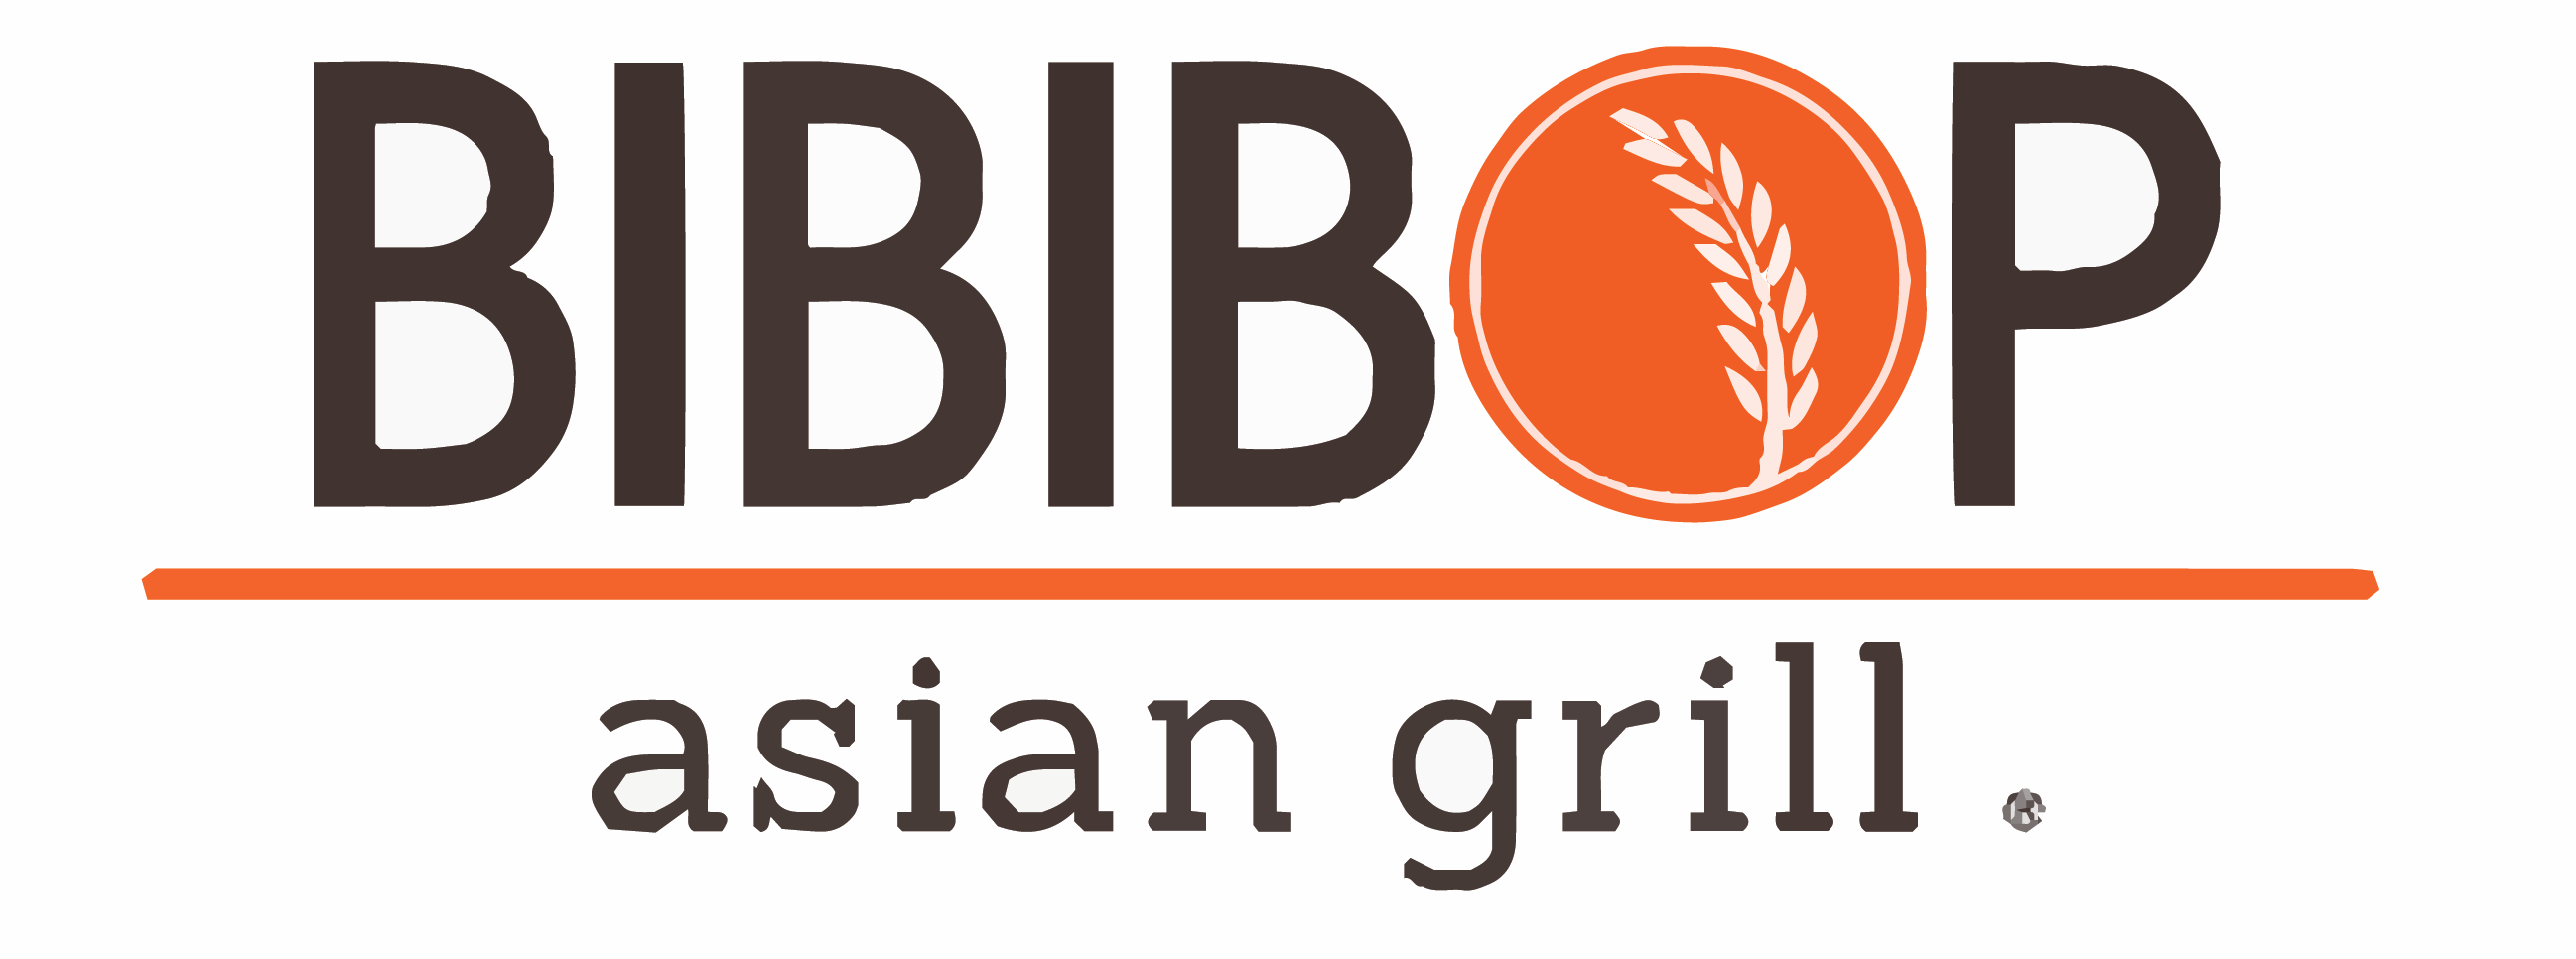 Bibibop Logo - Bibibop png image trace Real Estate Group